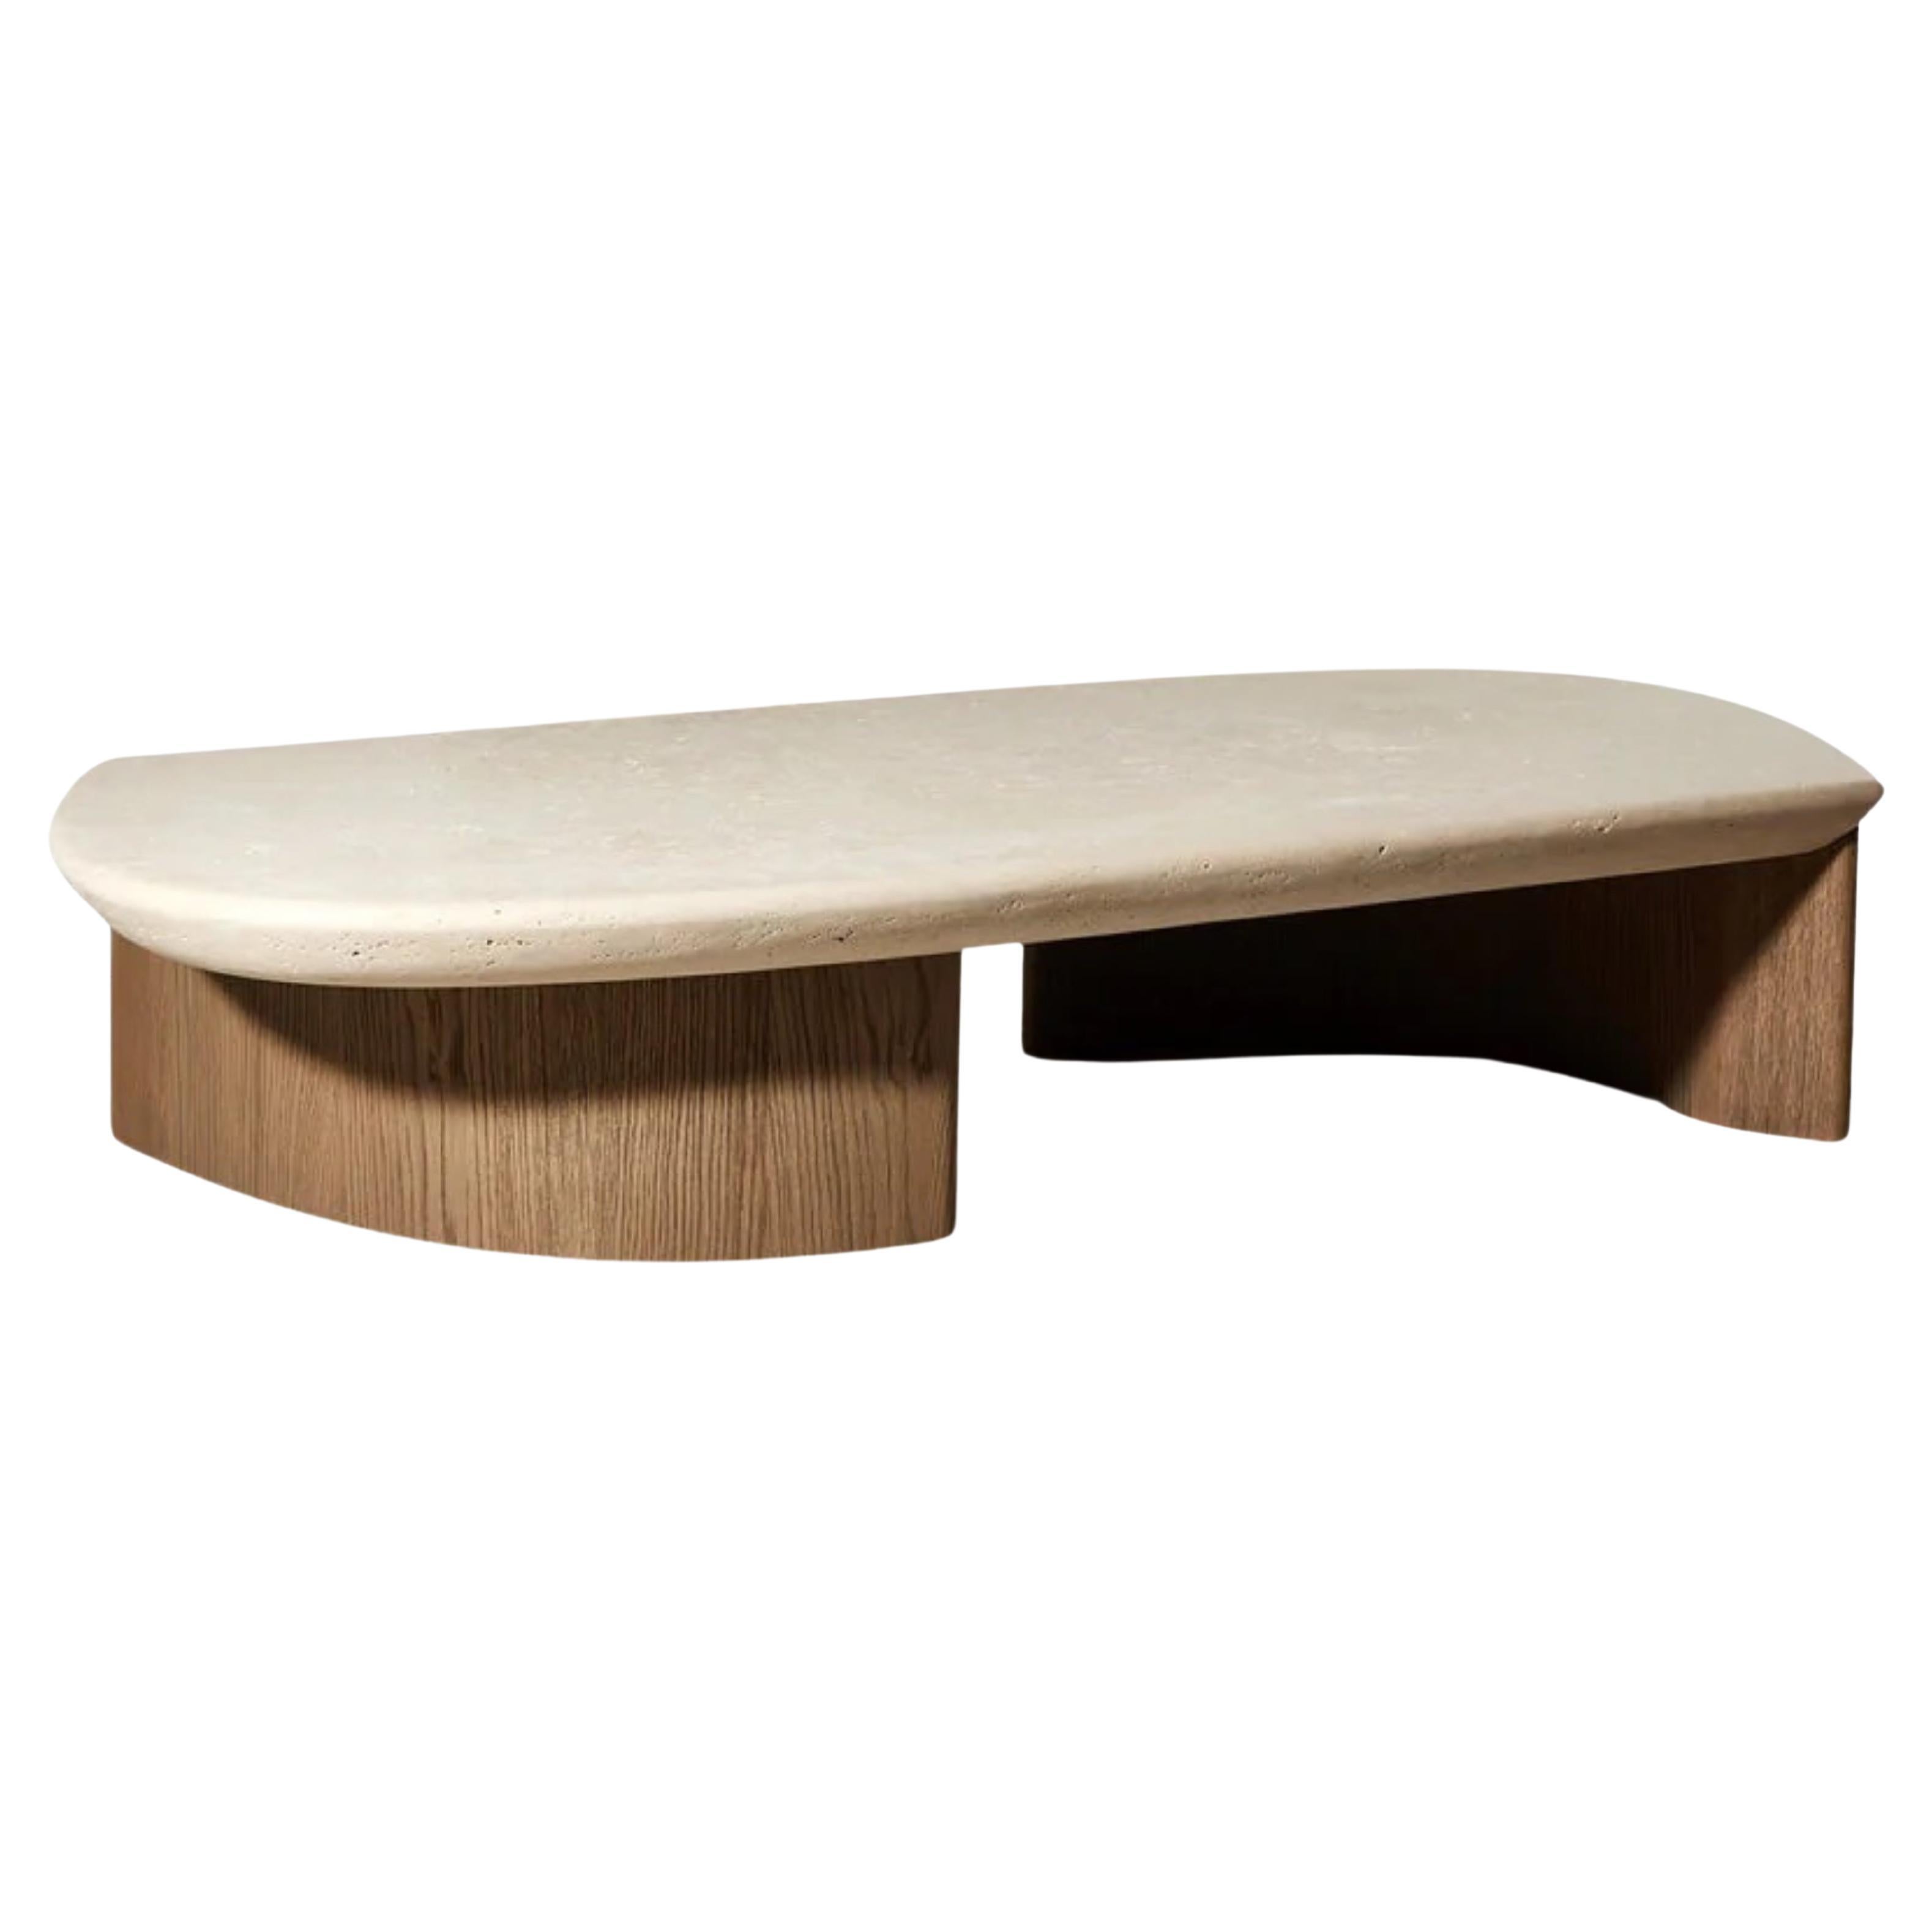 Table basse en travertin avec pieds en bois en vente